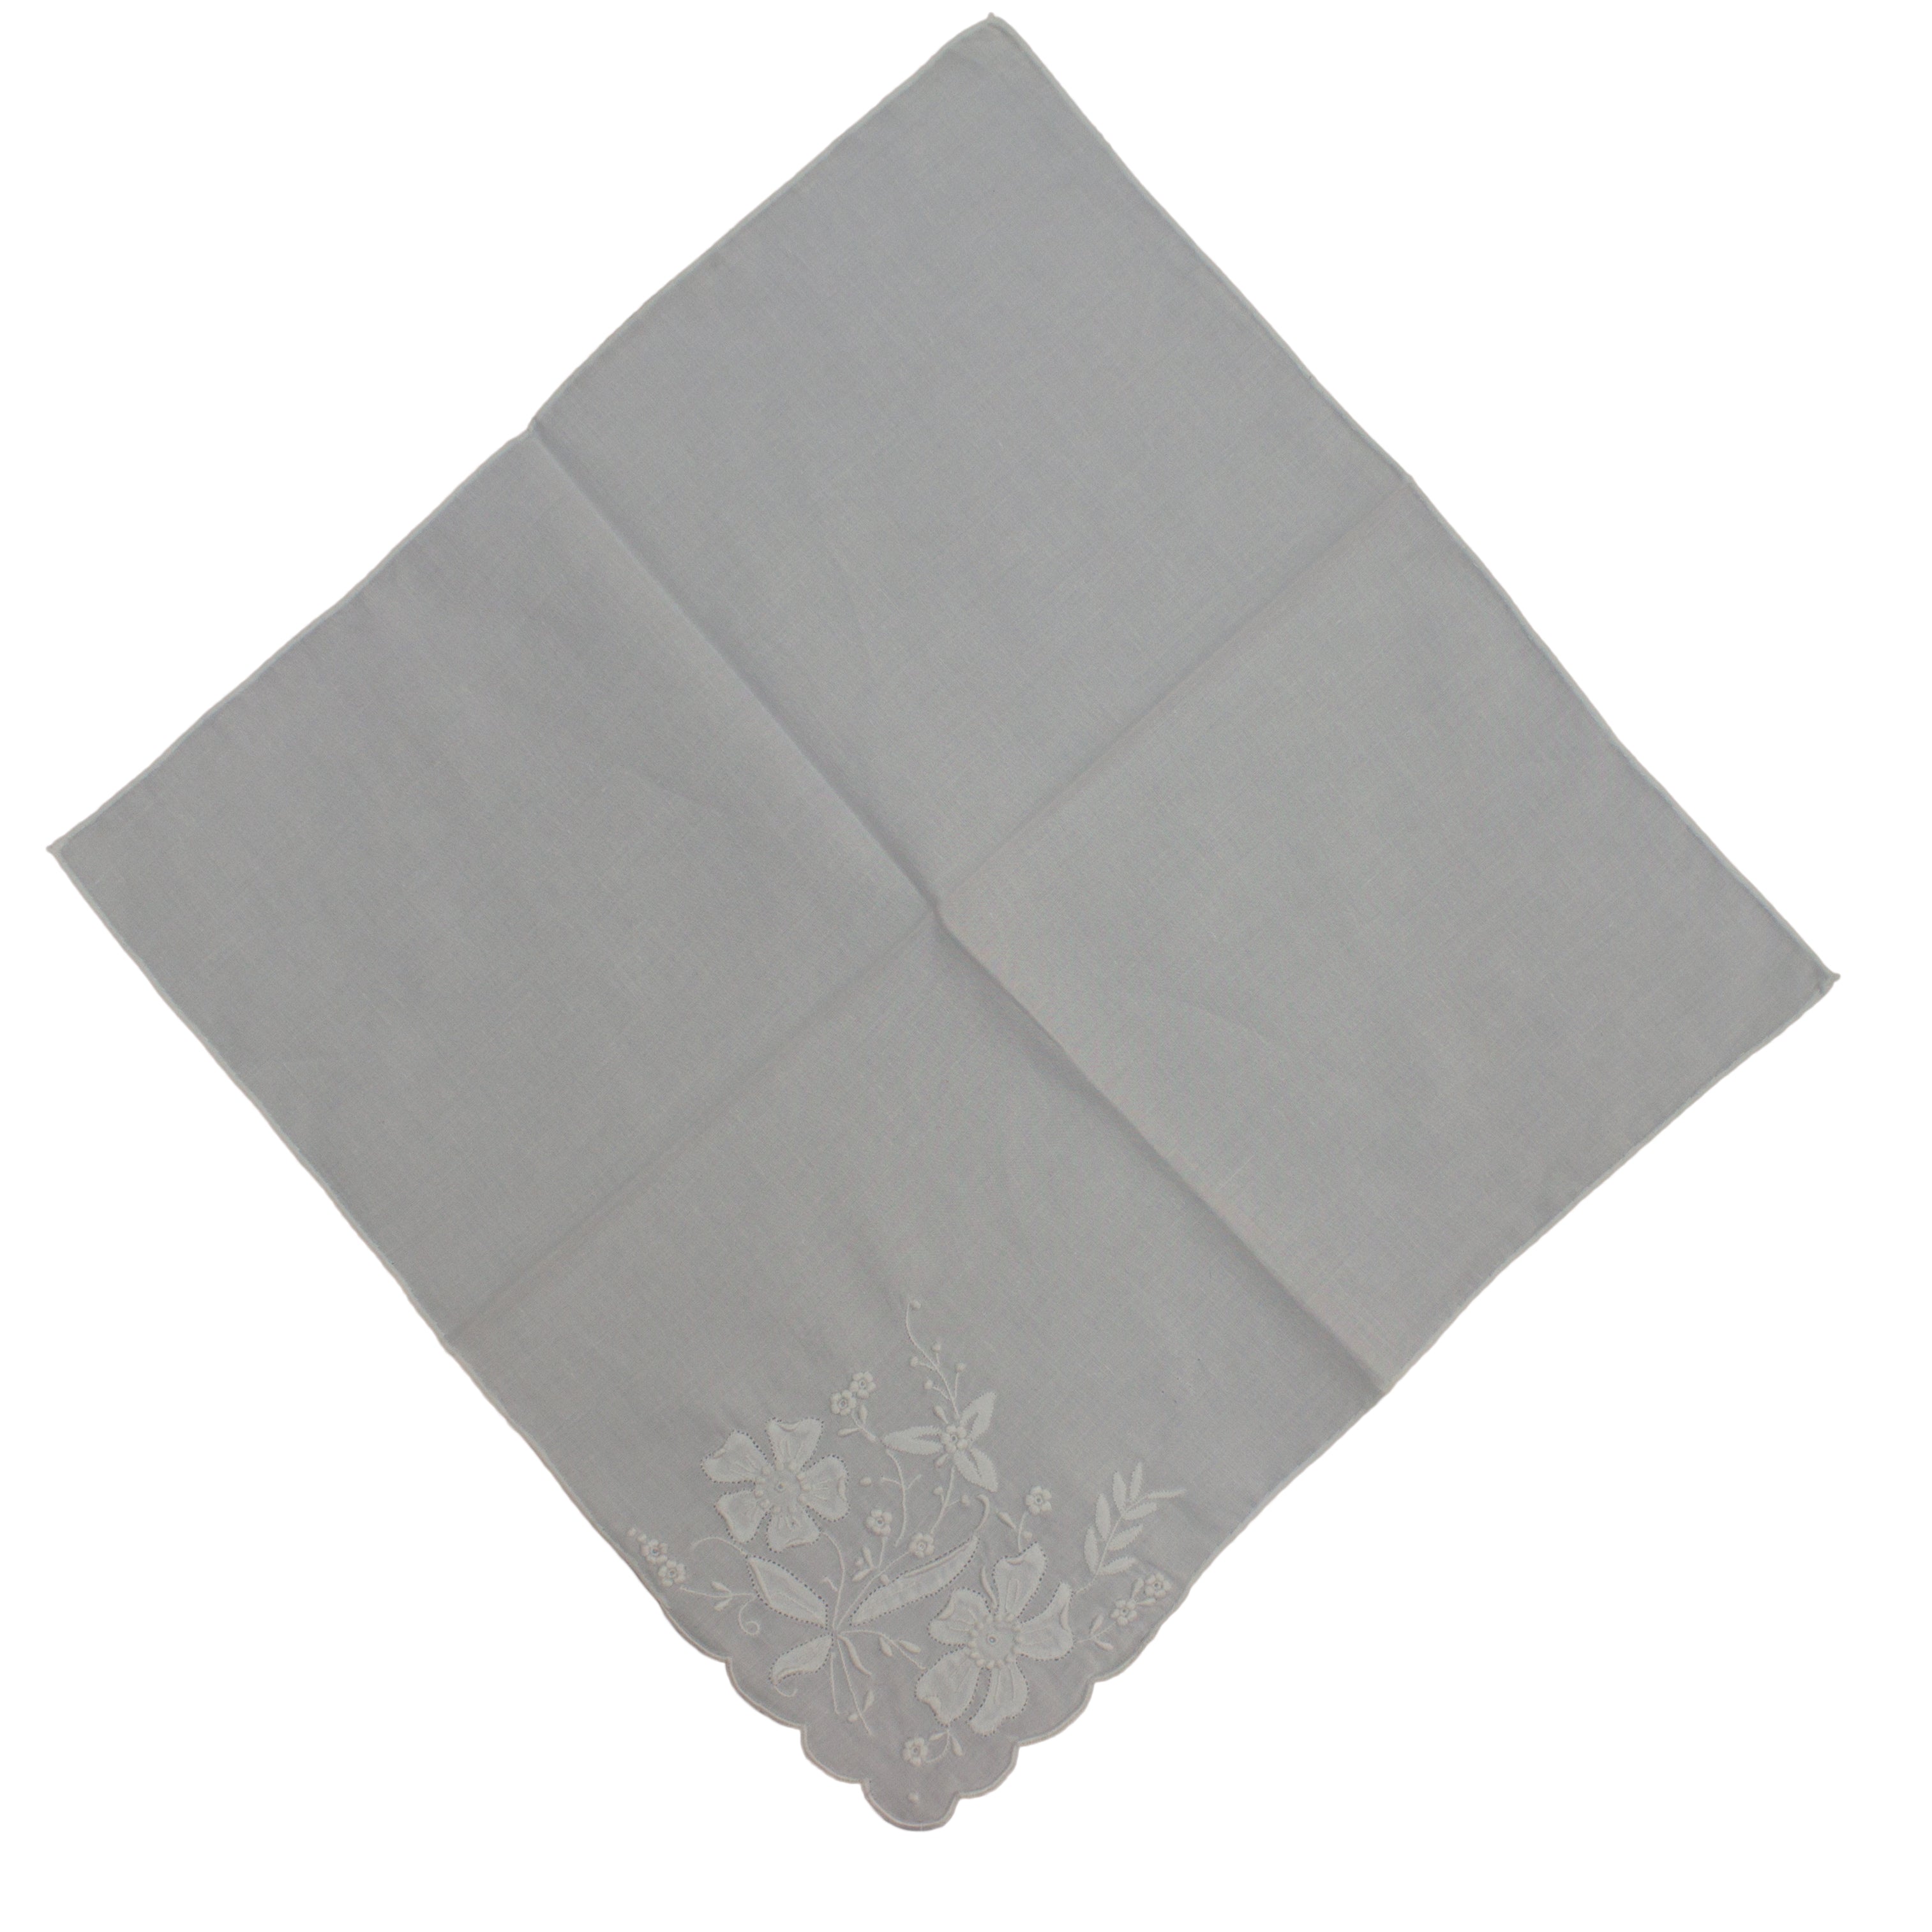 Hand embroidered handkerchief